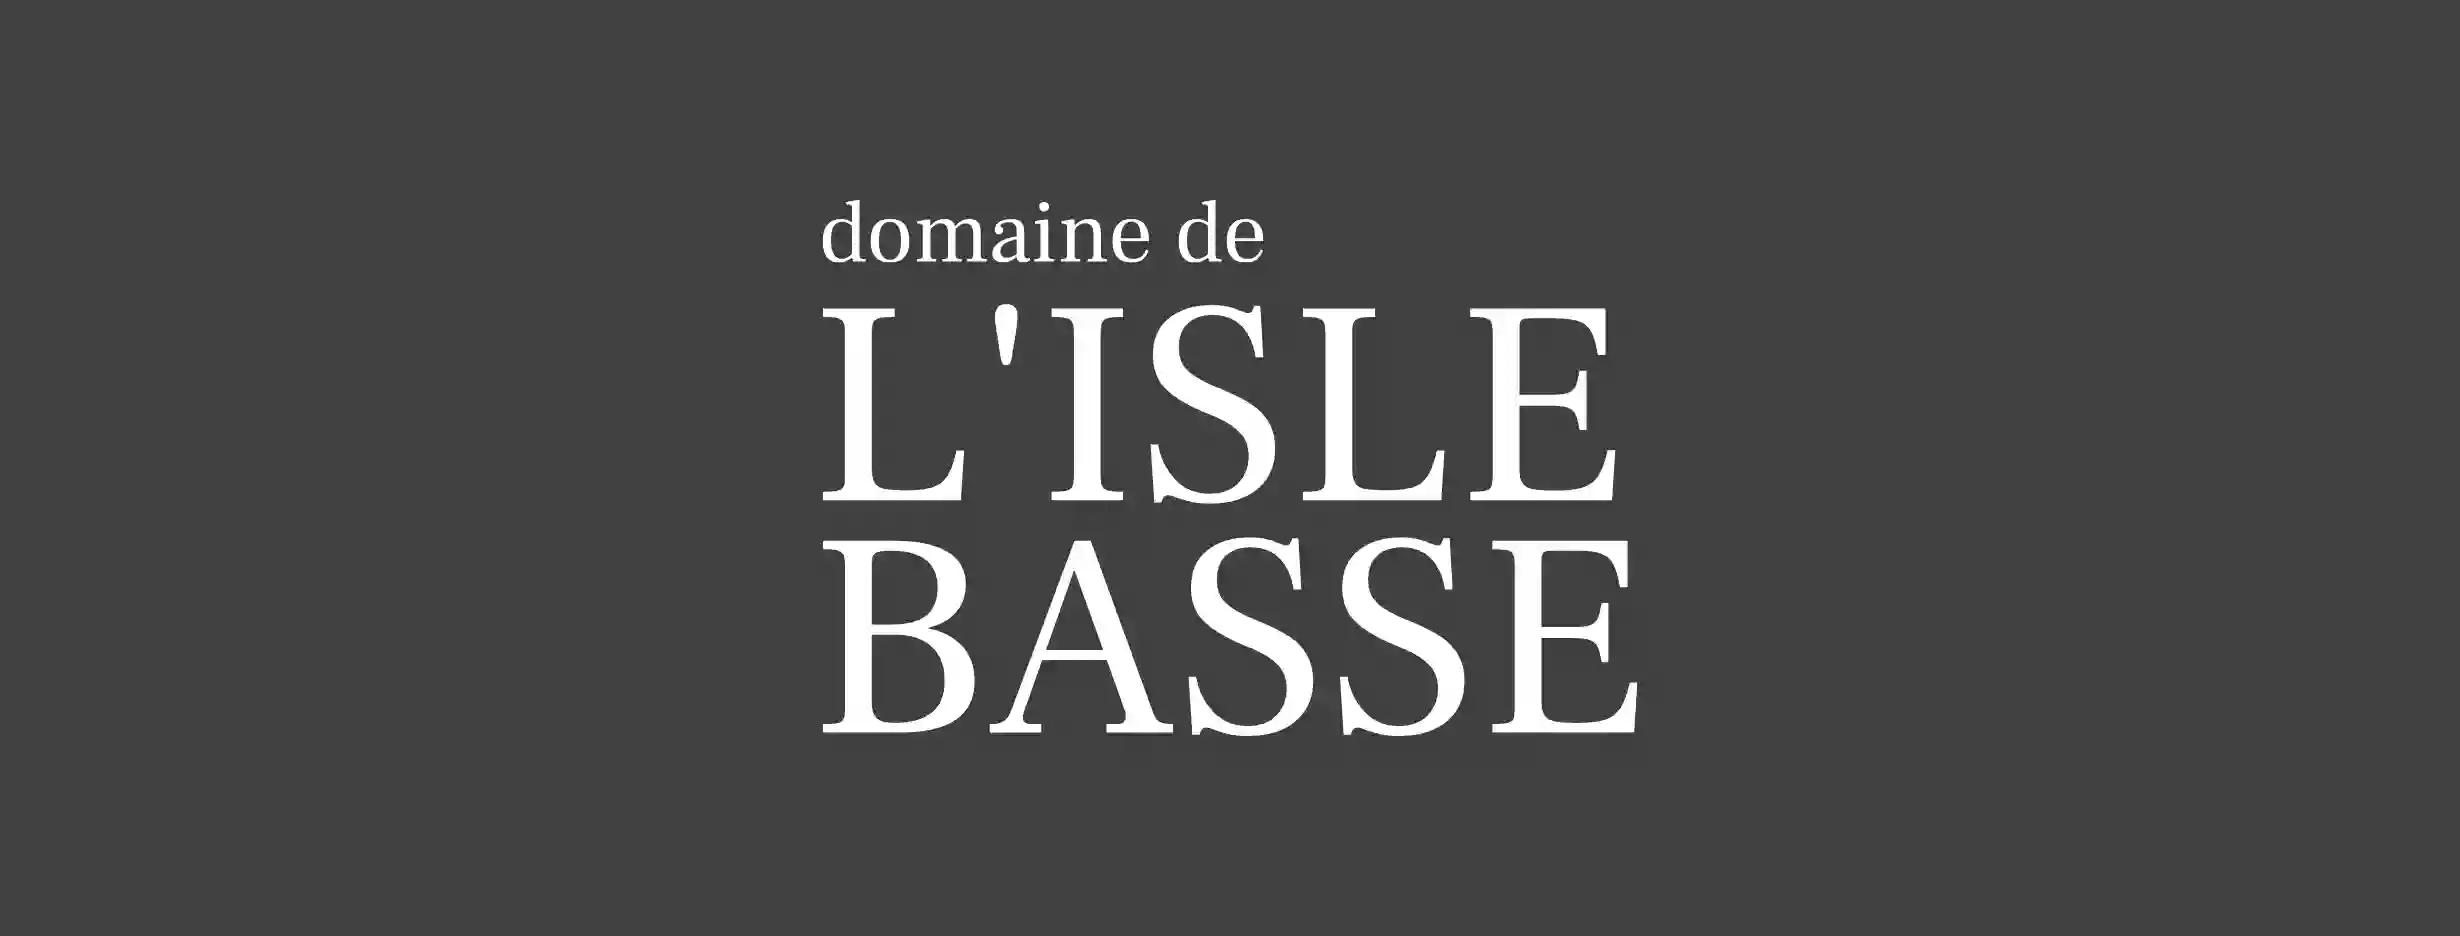 domaine de L'ISLE BASSE